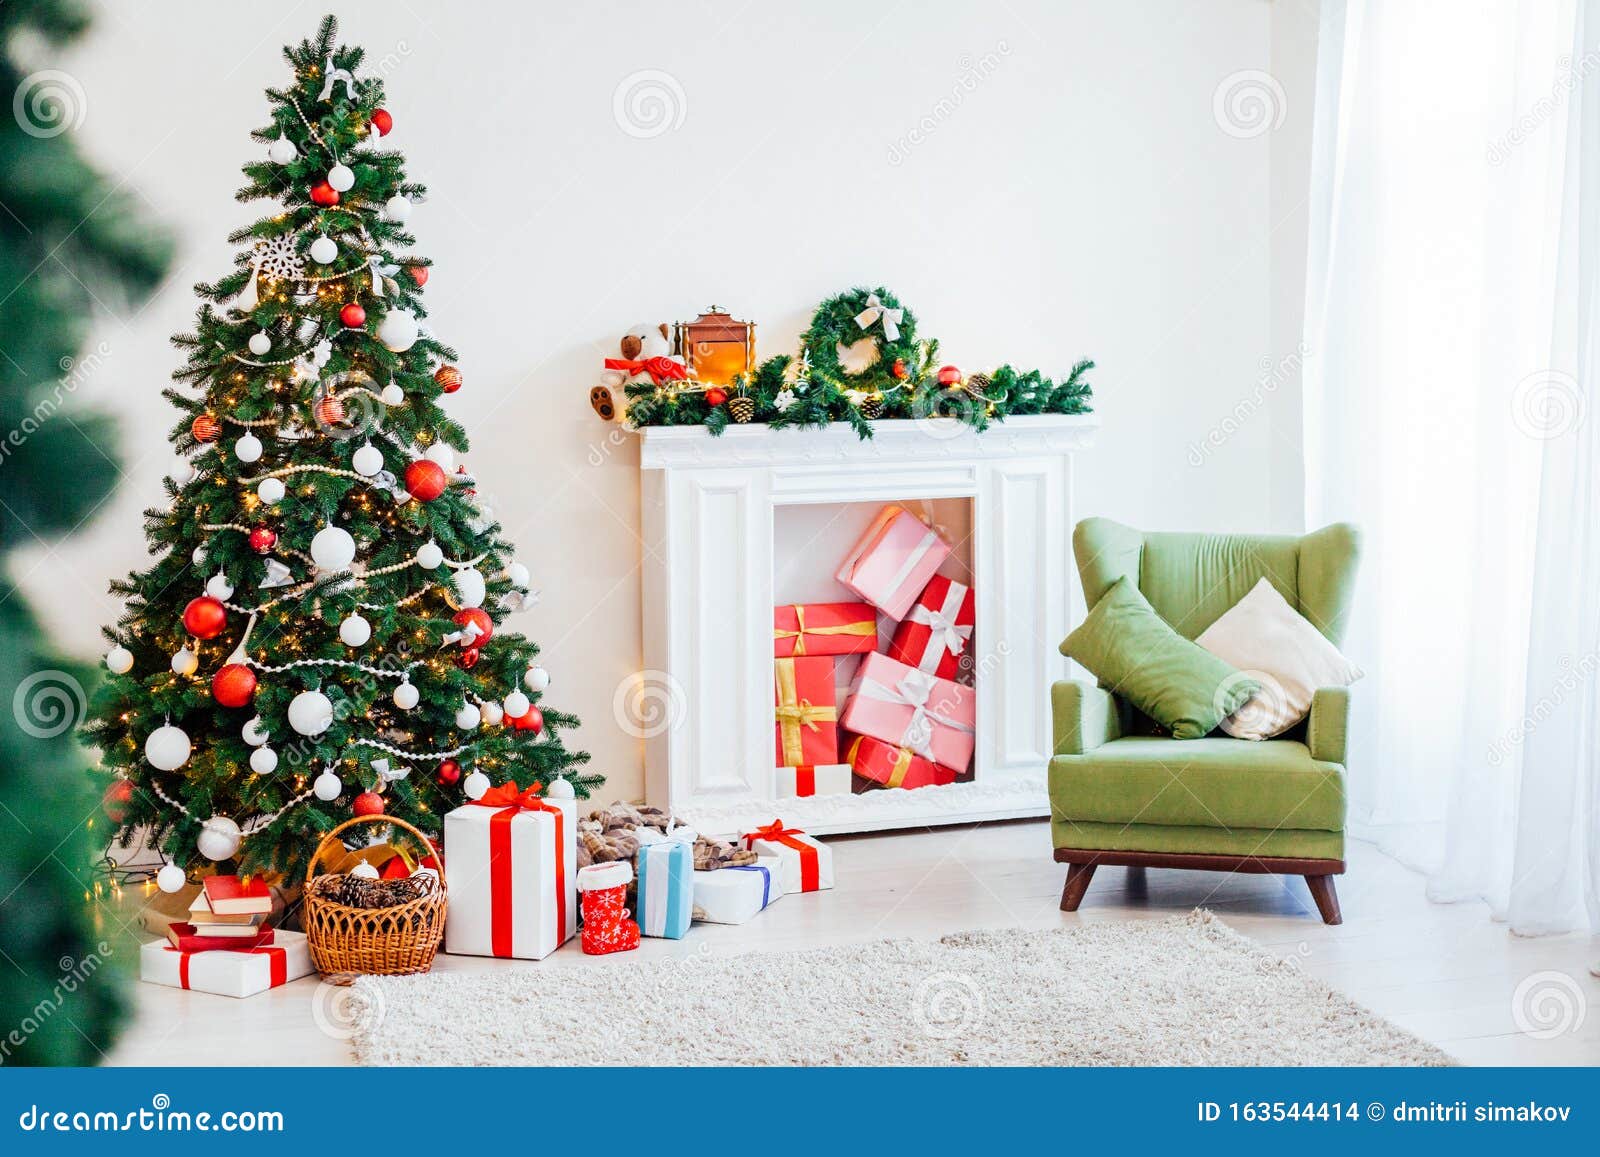 Christmas Background New Year Holidays Gifts Background House Stock Photo -  Image of design, congratulation: 163544414